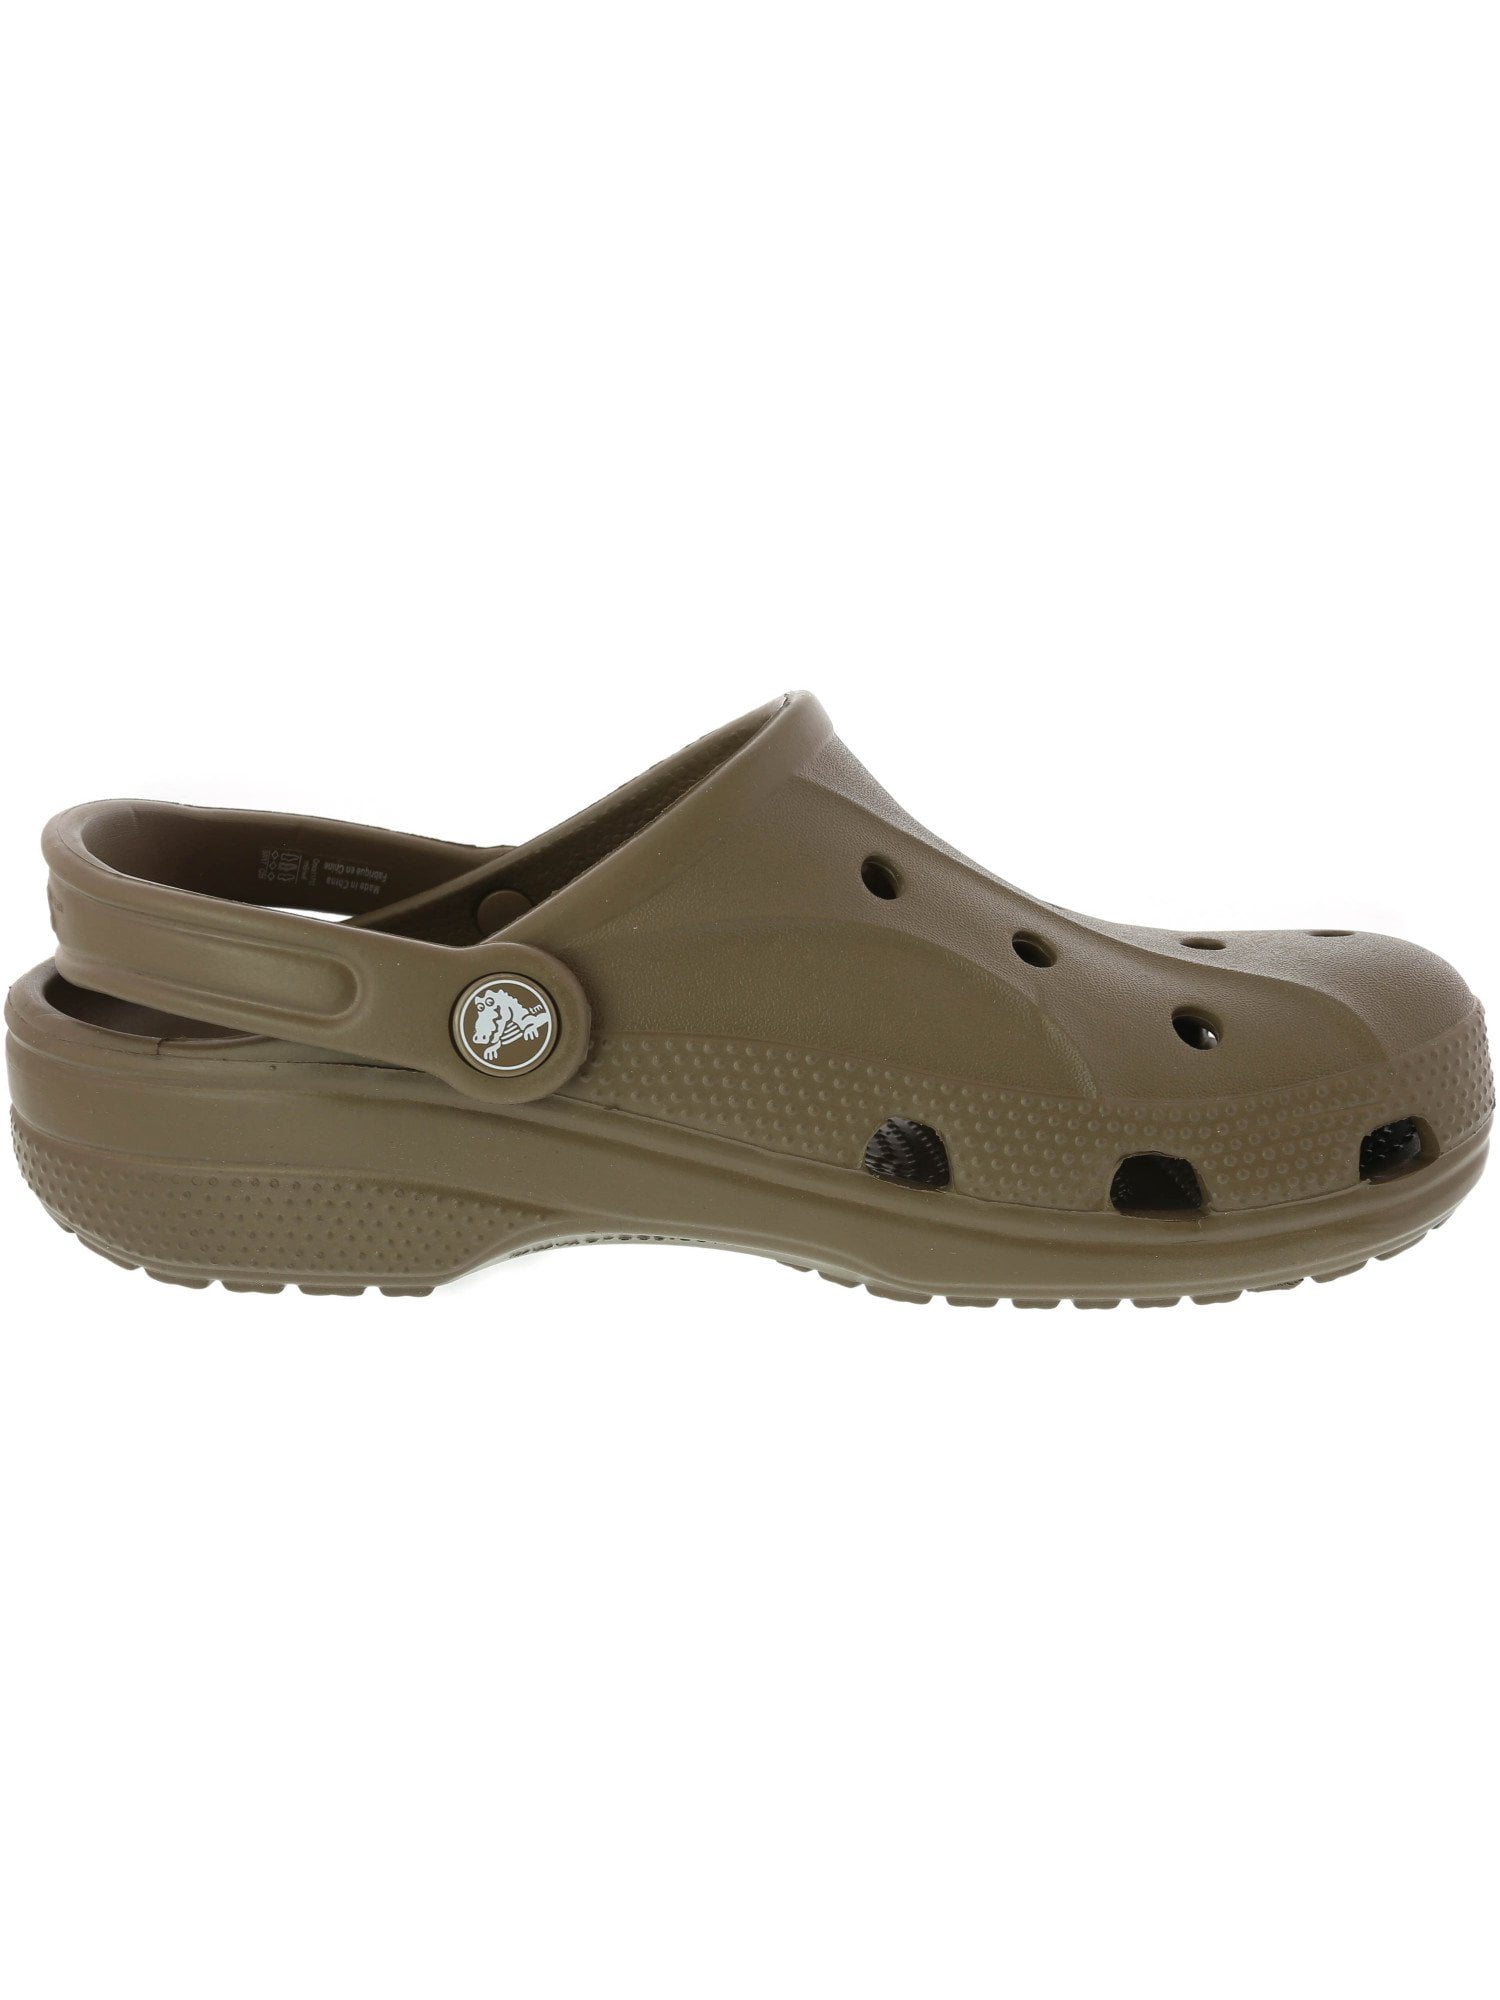 Crocs Feat Walnut Ankle-High Clogs - 9M / 7M | Walmart Canada